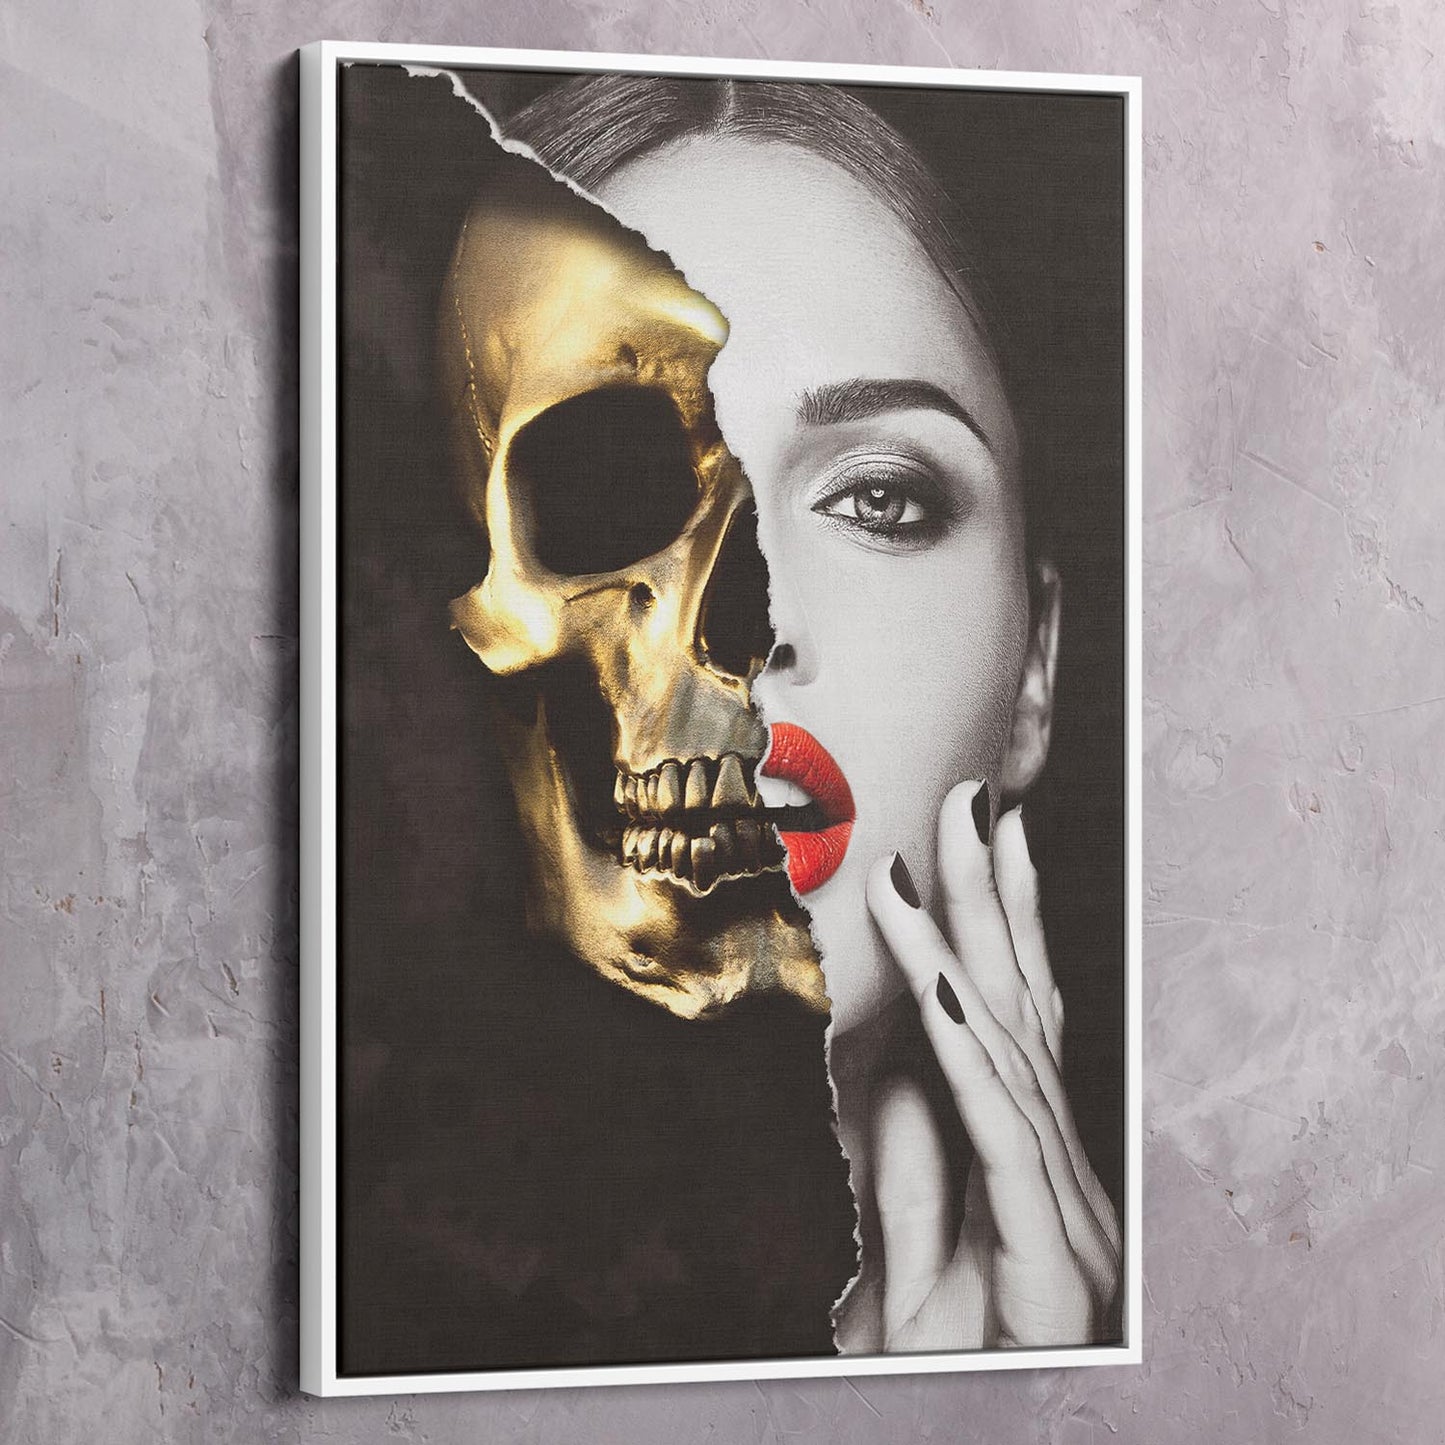 Skull Beauty Alter Ego Wall Art | Inspirational Wall Art Motivational Wall Art Quotes Office Art | ImpaktMaker Exclusive Canvas Art Portrait